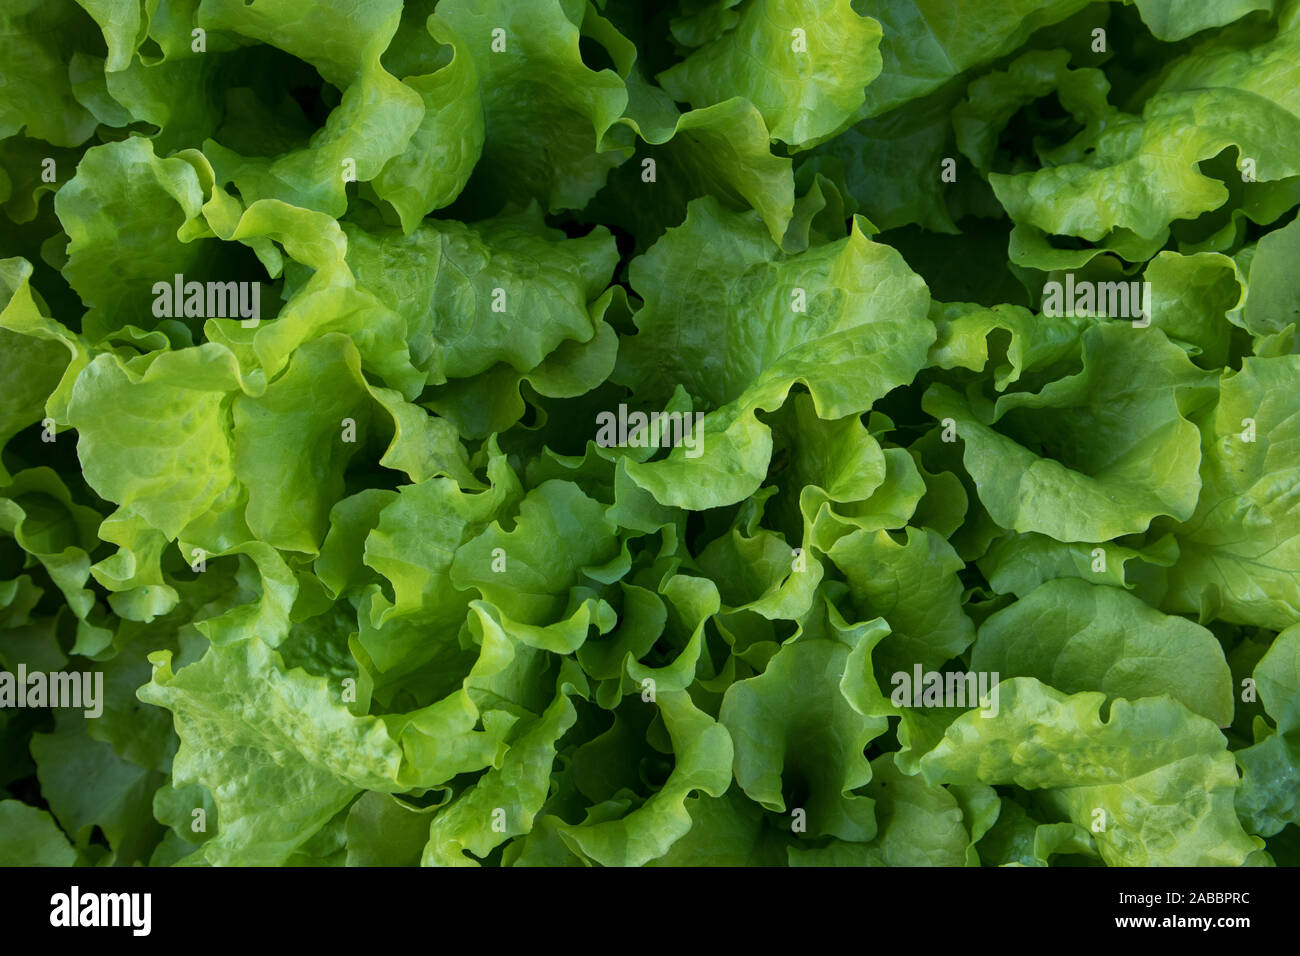 Green Leaf Lettuce Background Stock Photo